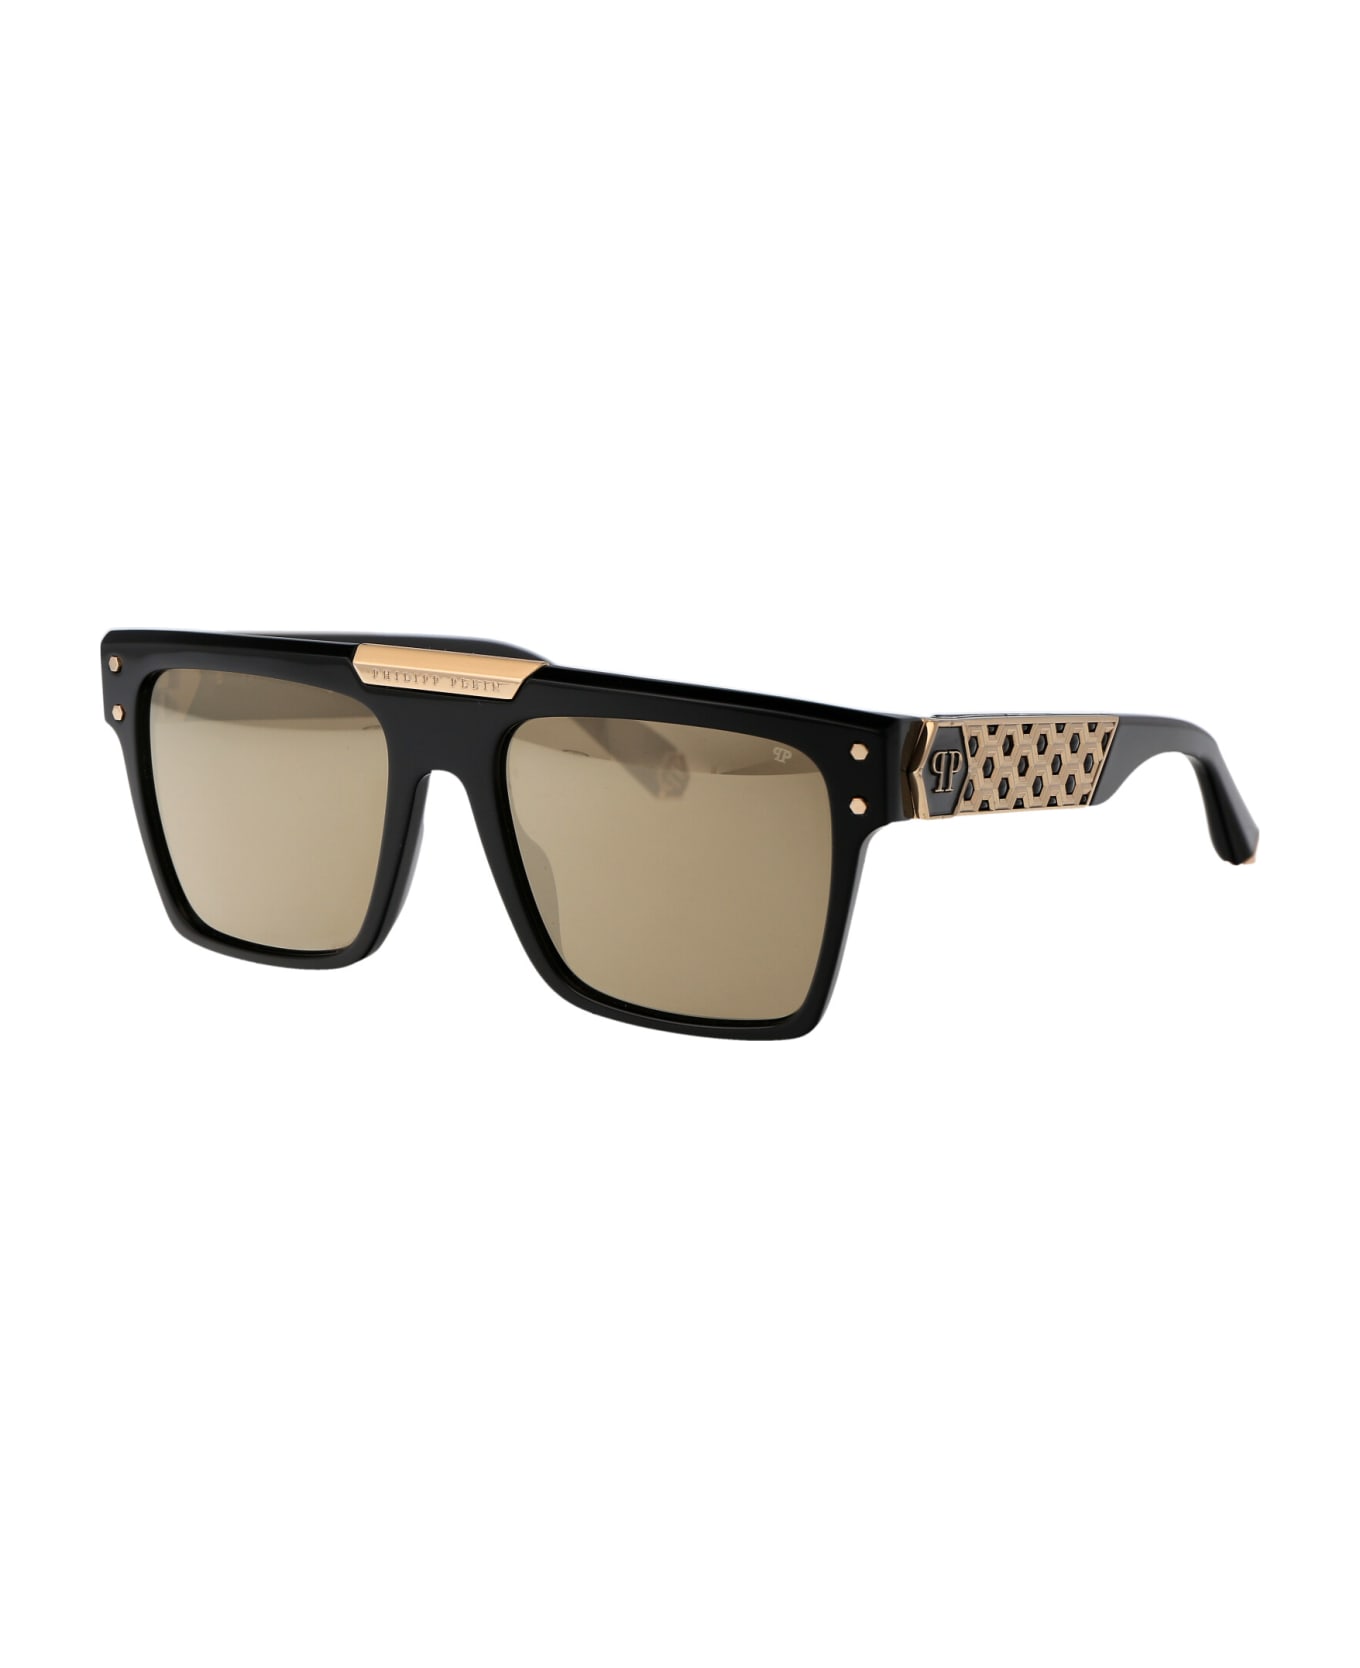 Philipp Plein Spp080 Sunglasses - 700G BLACK サングラス